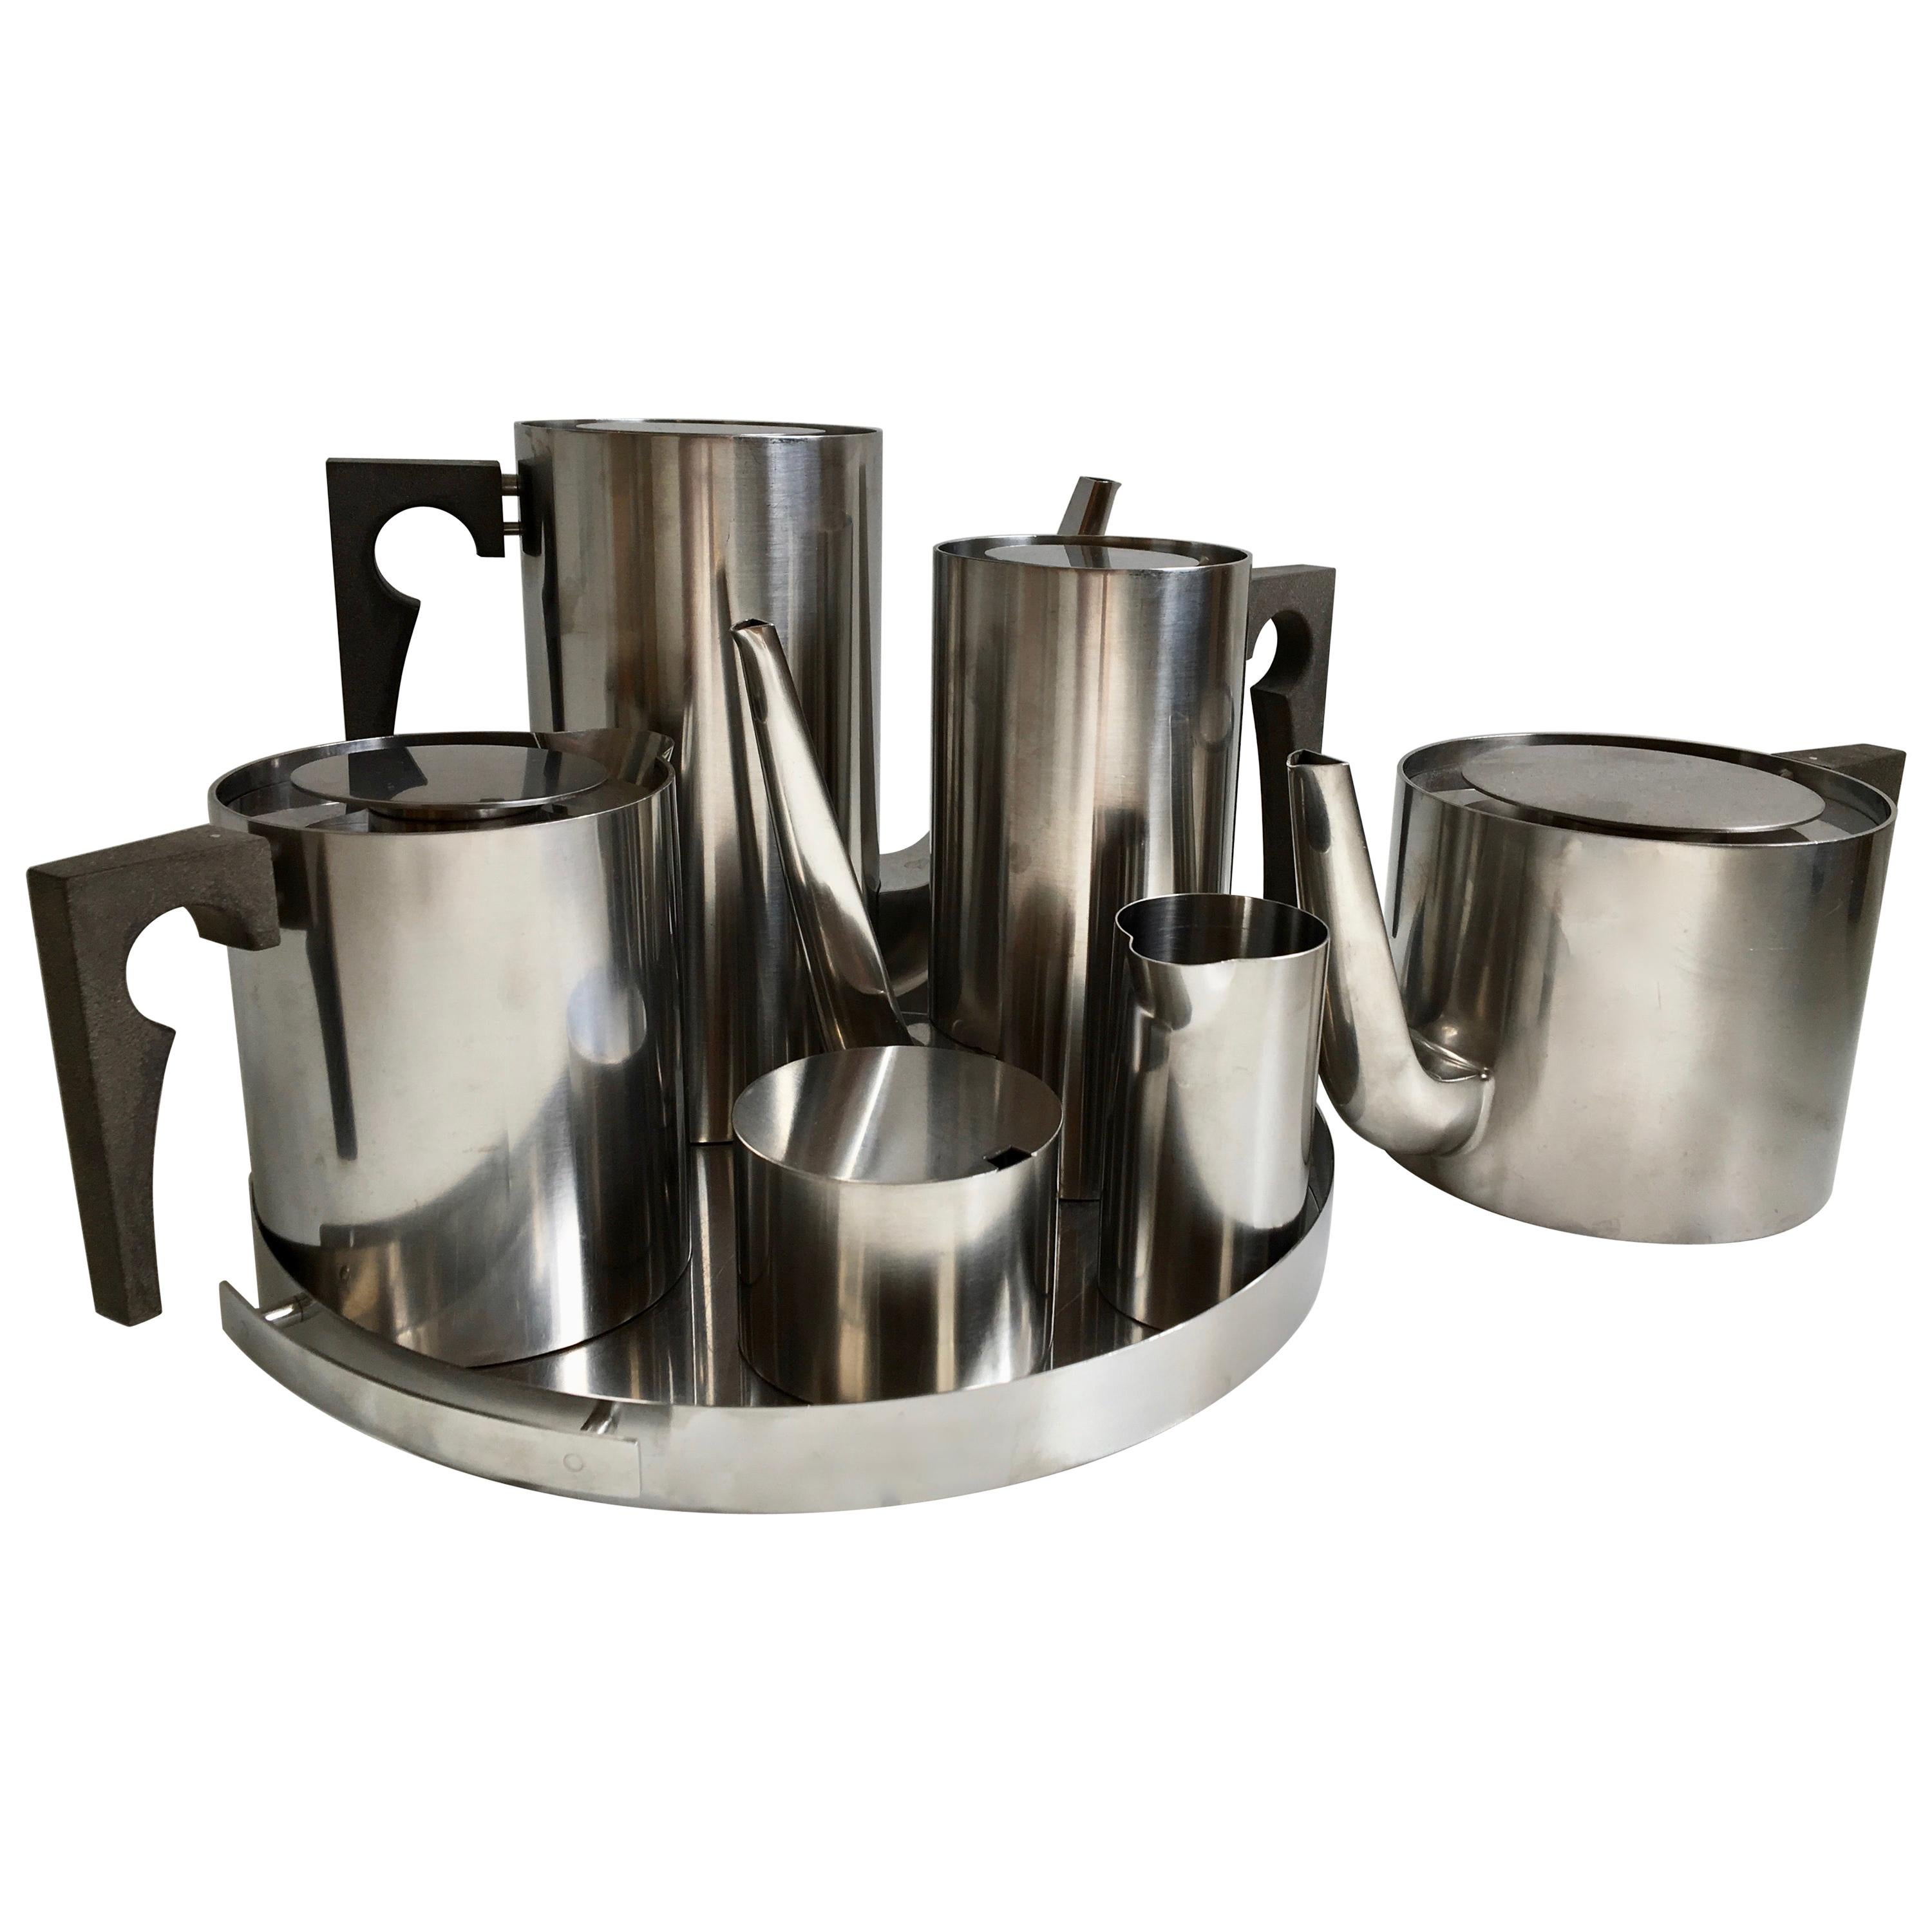 Midcentury Danish Stainless Steel Tea or Coffee Set by Arne Jacobsen for Stelton im Angebot